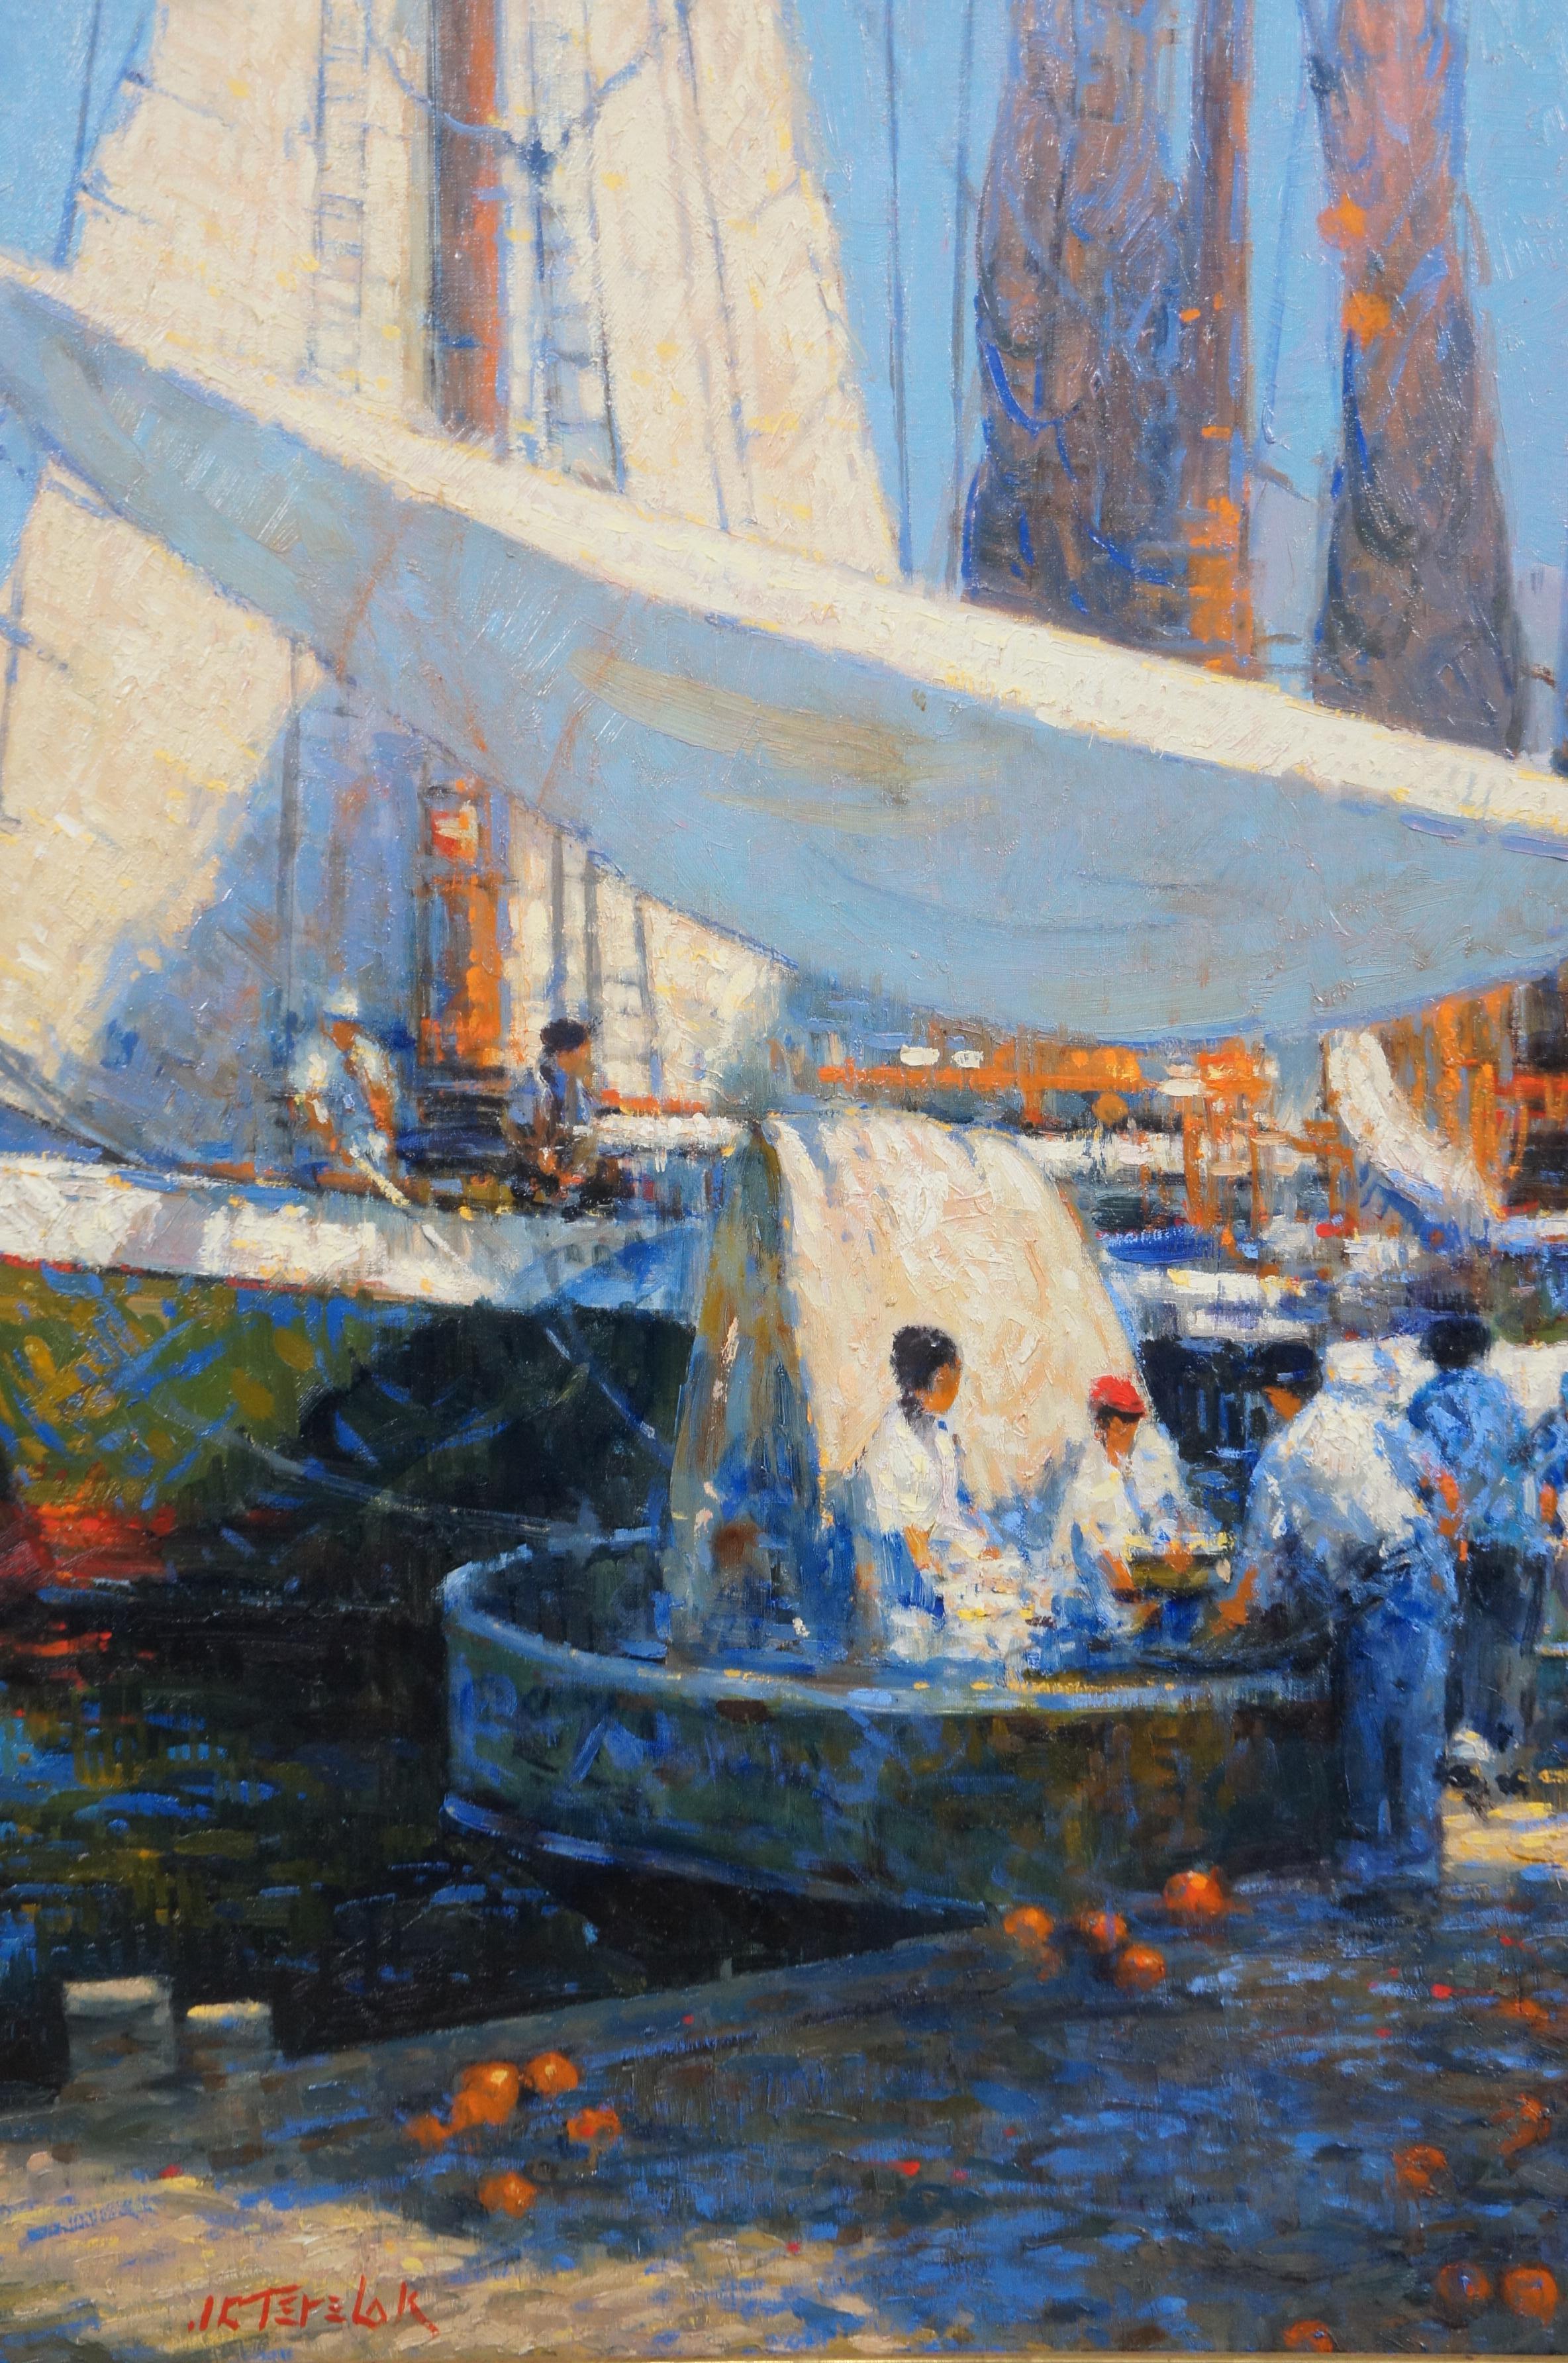 Expressionist John Terelak 'Upland Game' Impressionist Oil Painting Dock Sailboats Harbor